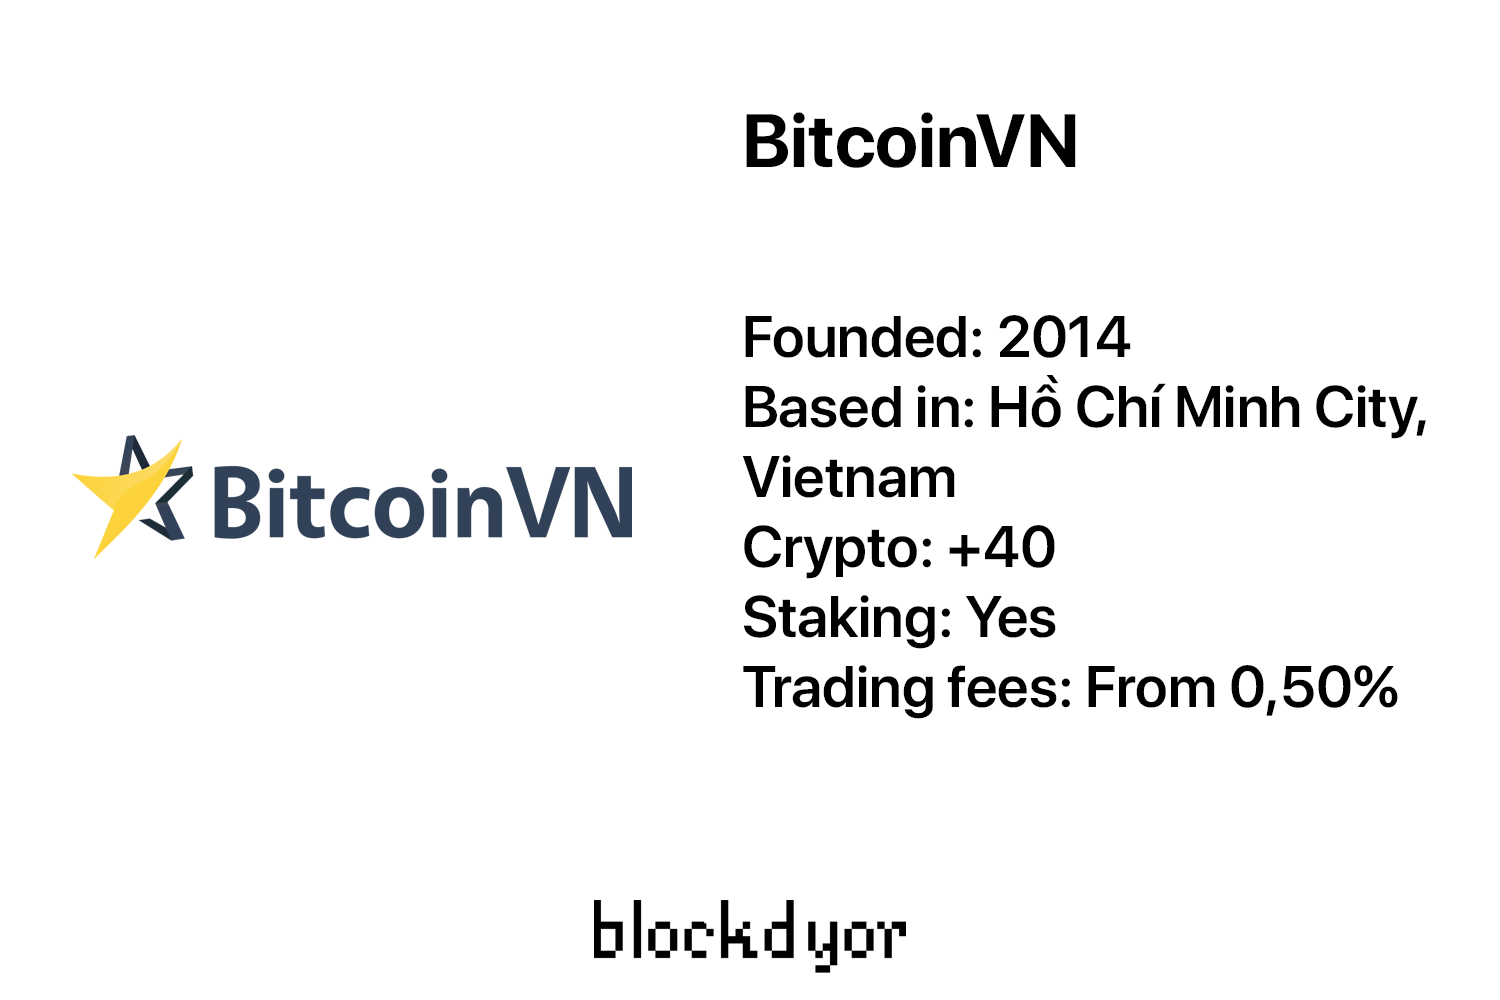 BitcoinVN Overview